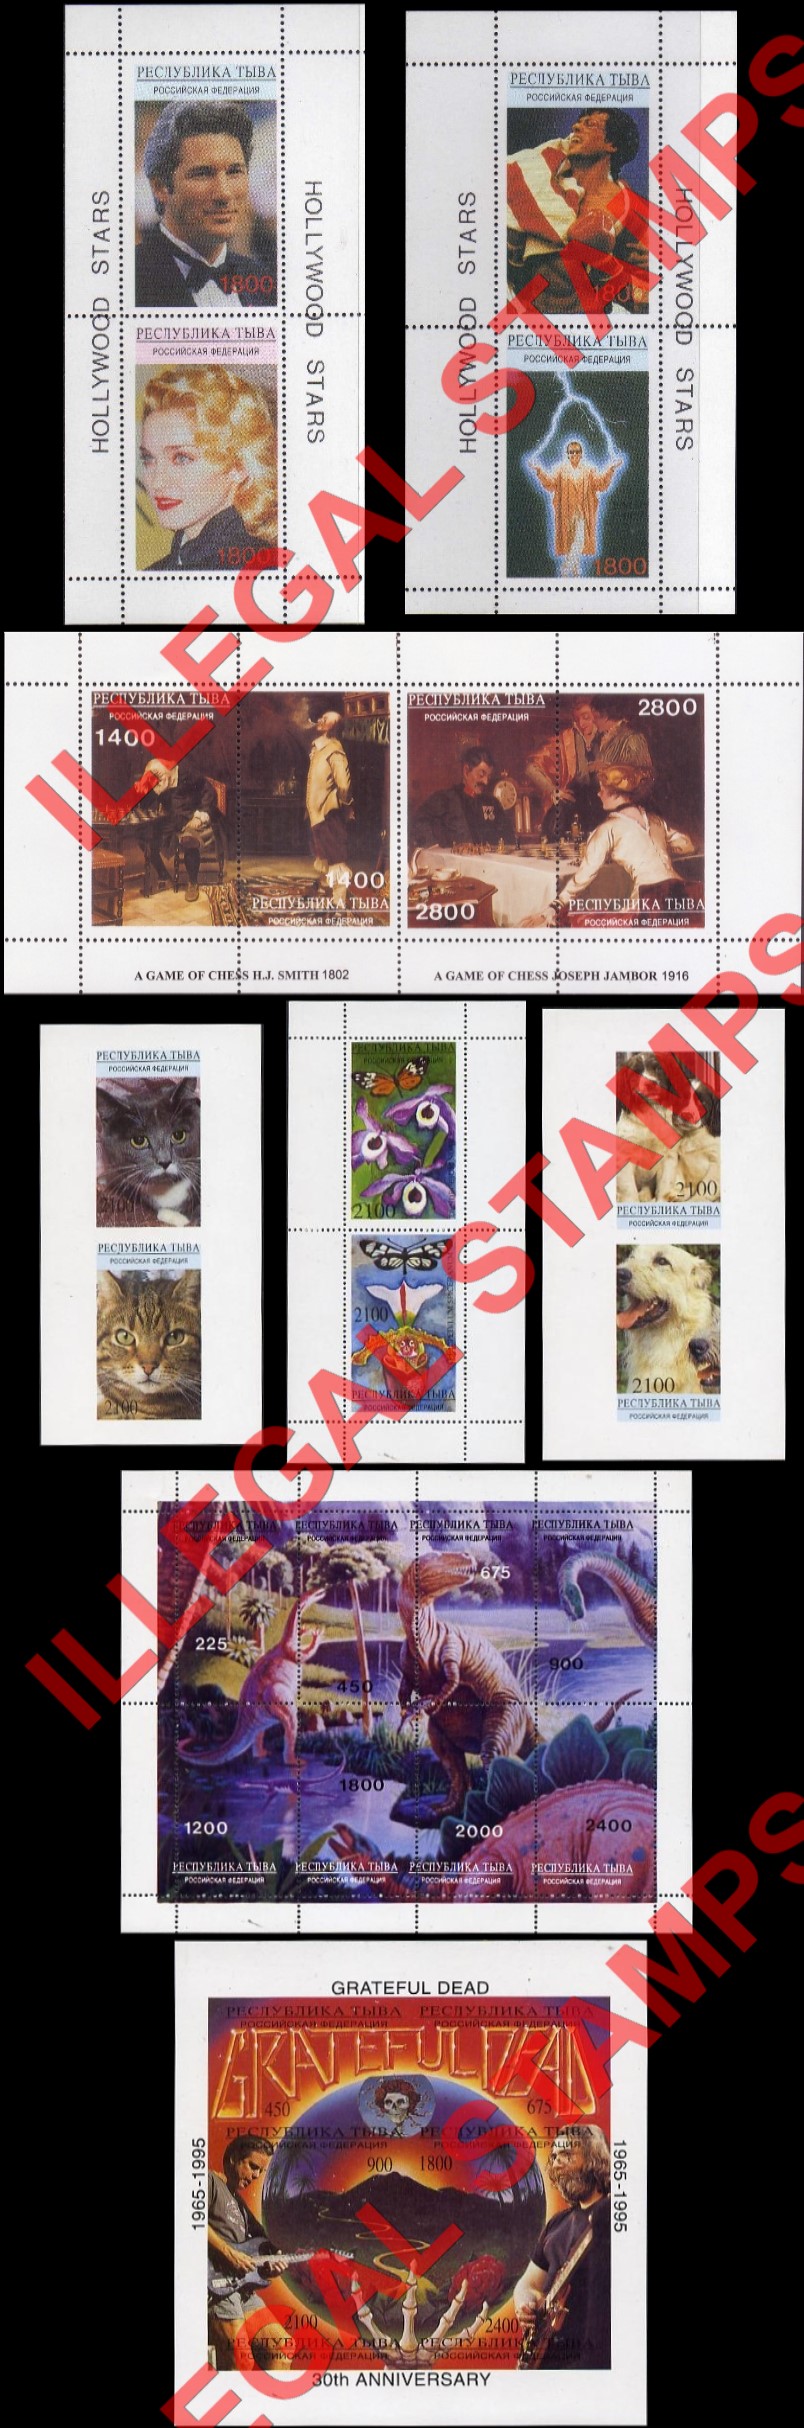 Republic of Tuva 1995 Counterfeit Illegal Stamps (Part 2)